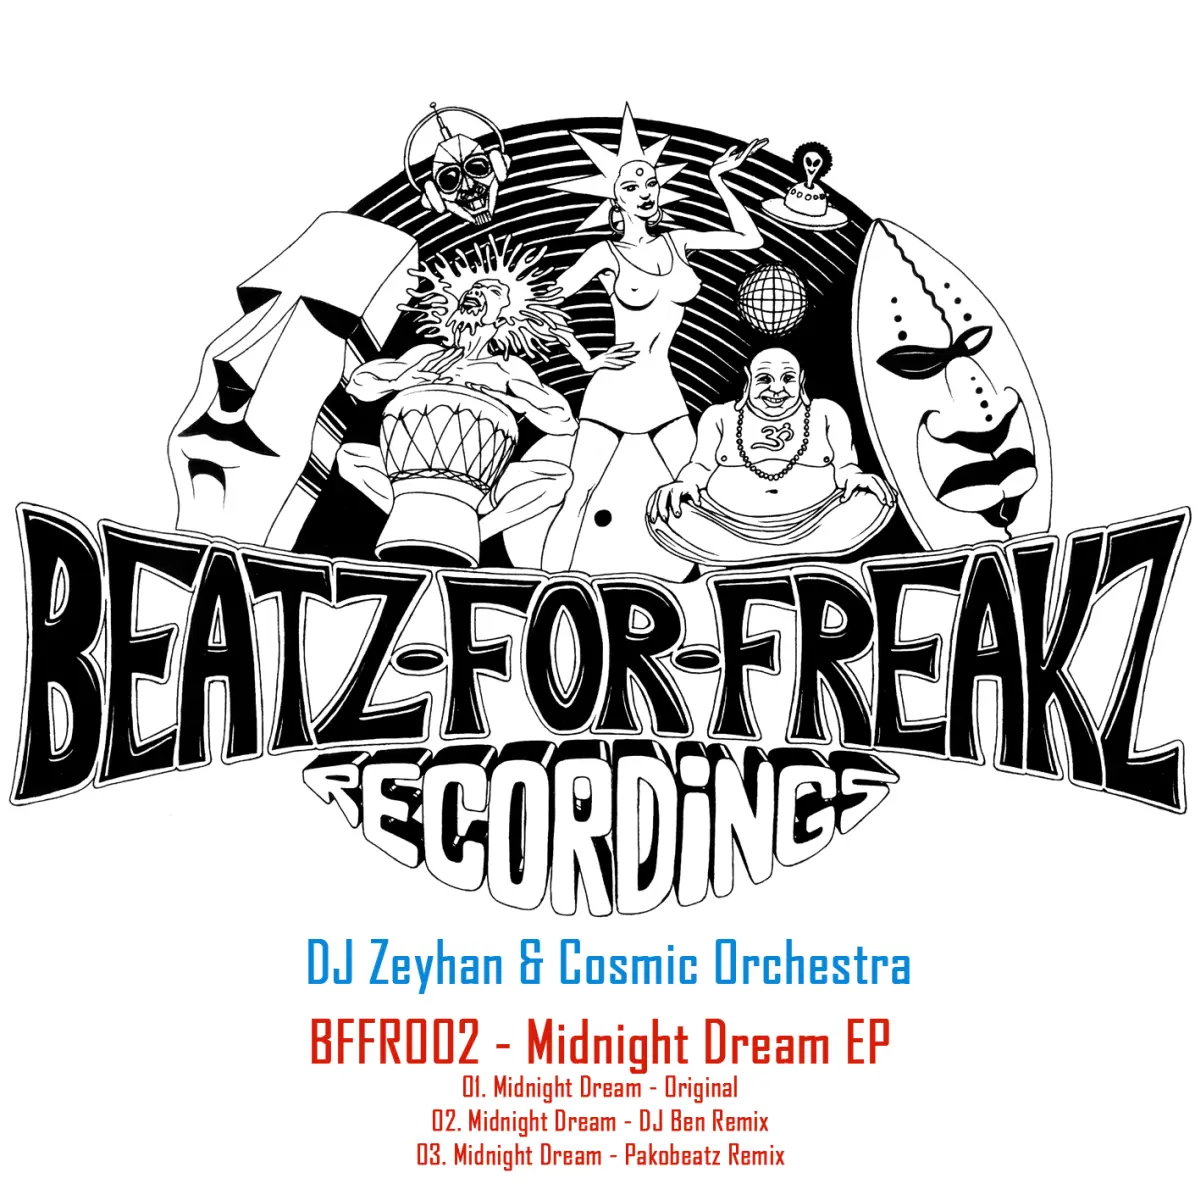 BFFR002 - DJ Zeyhan & Cosmic Orchestra - Midnight Dream